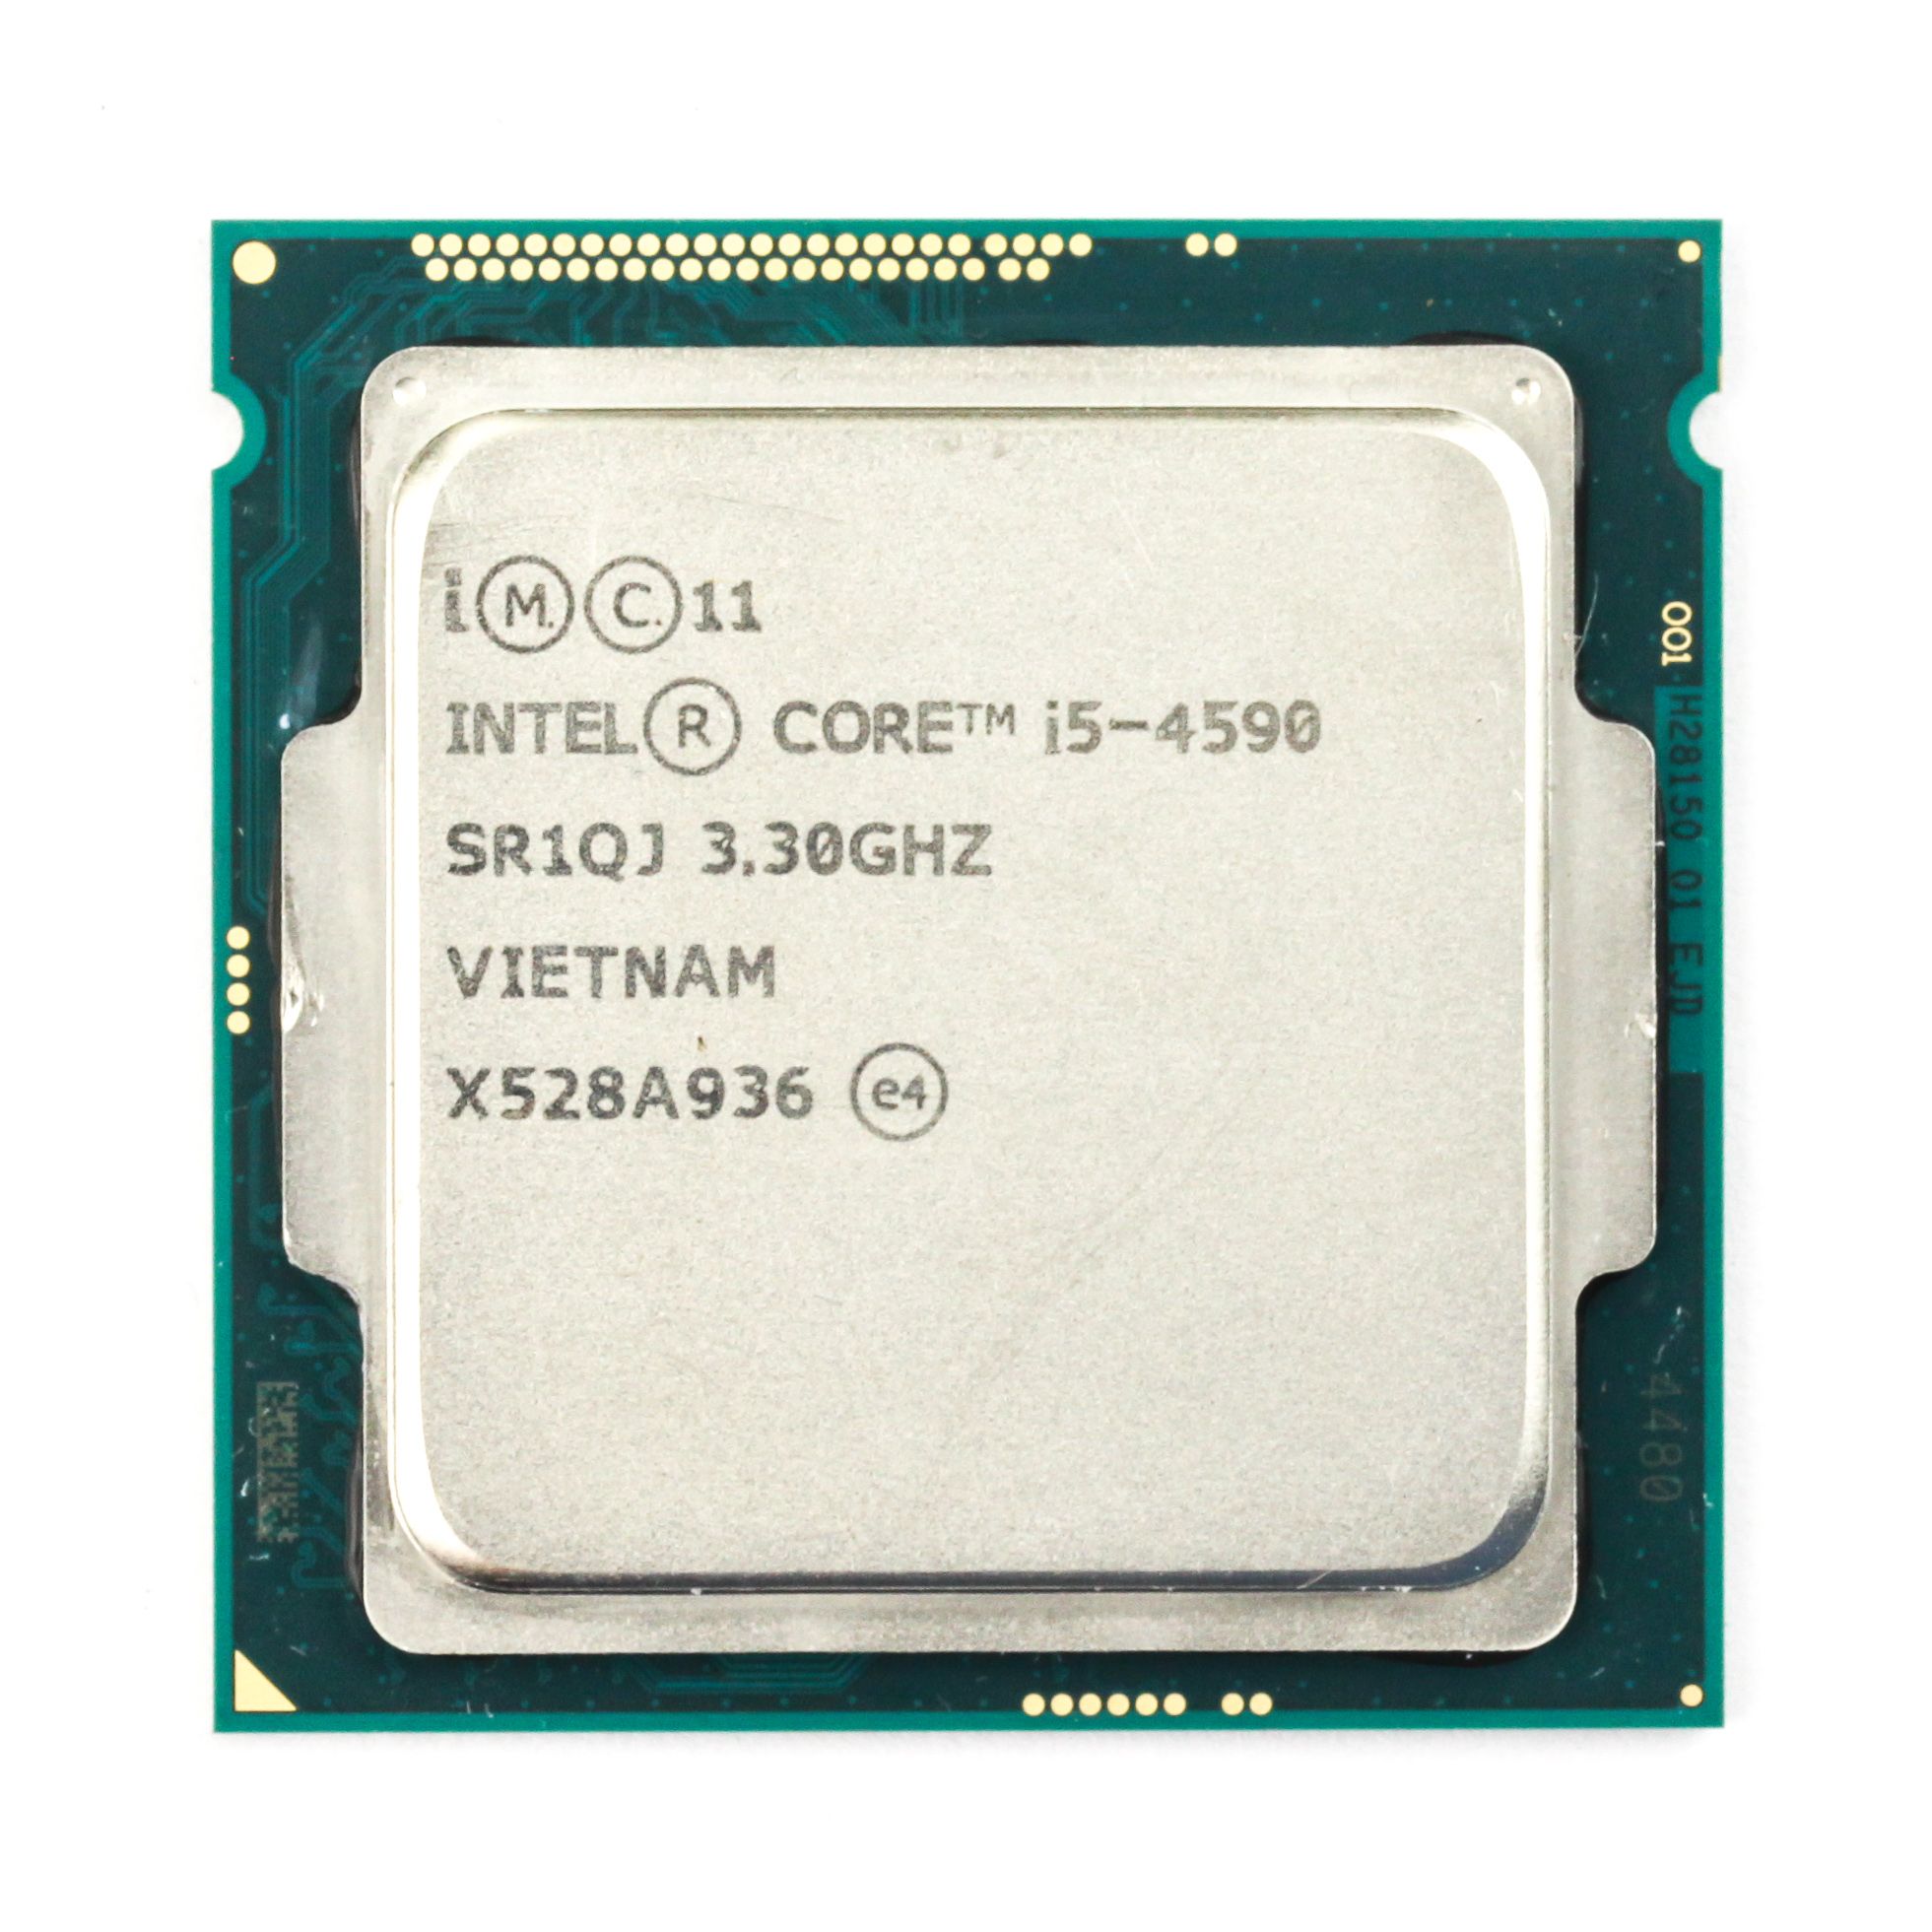 Intel® Core™ i5-4590 Processor 6M Cache, up to 3.70 GHz